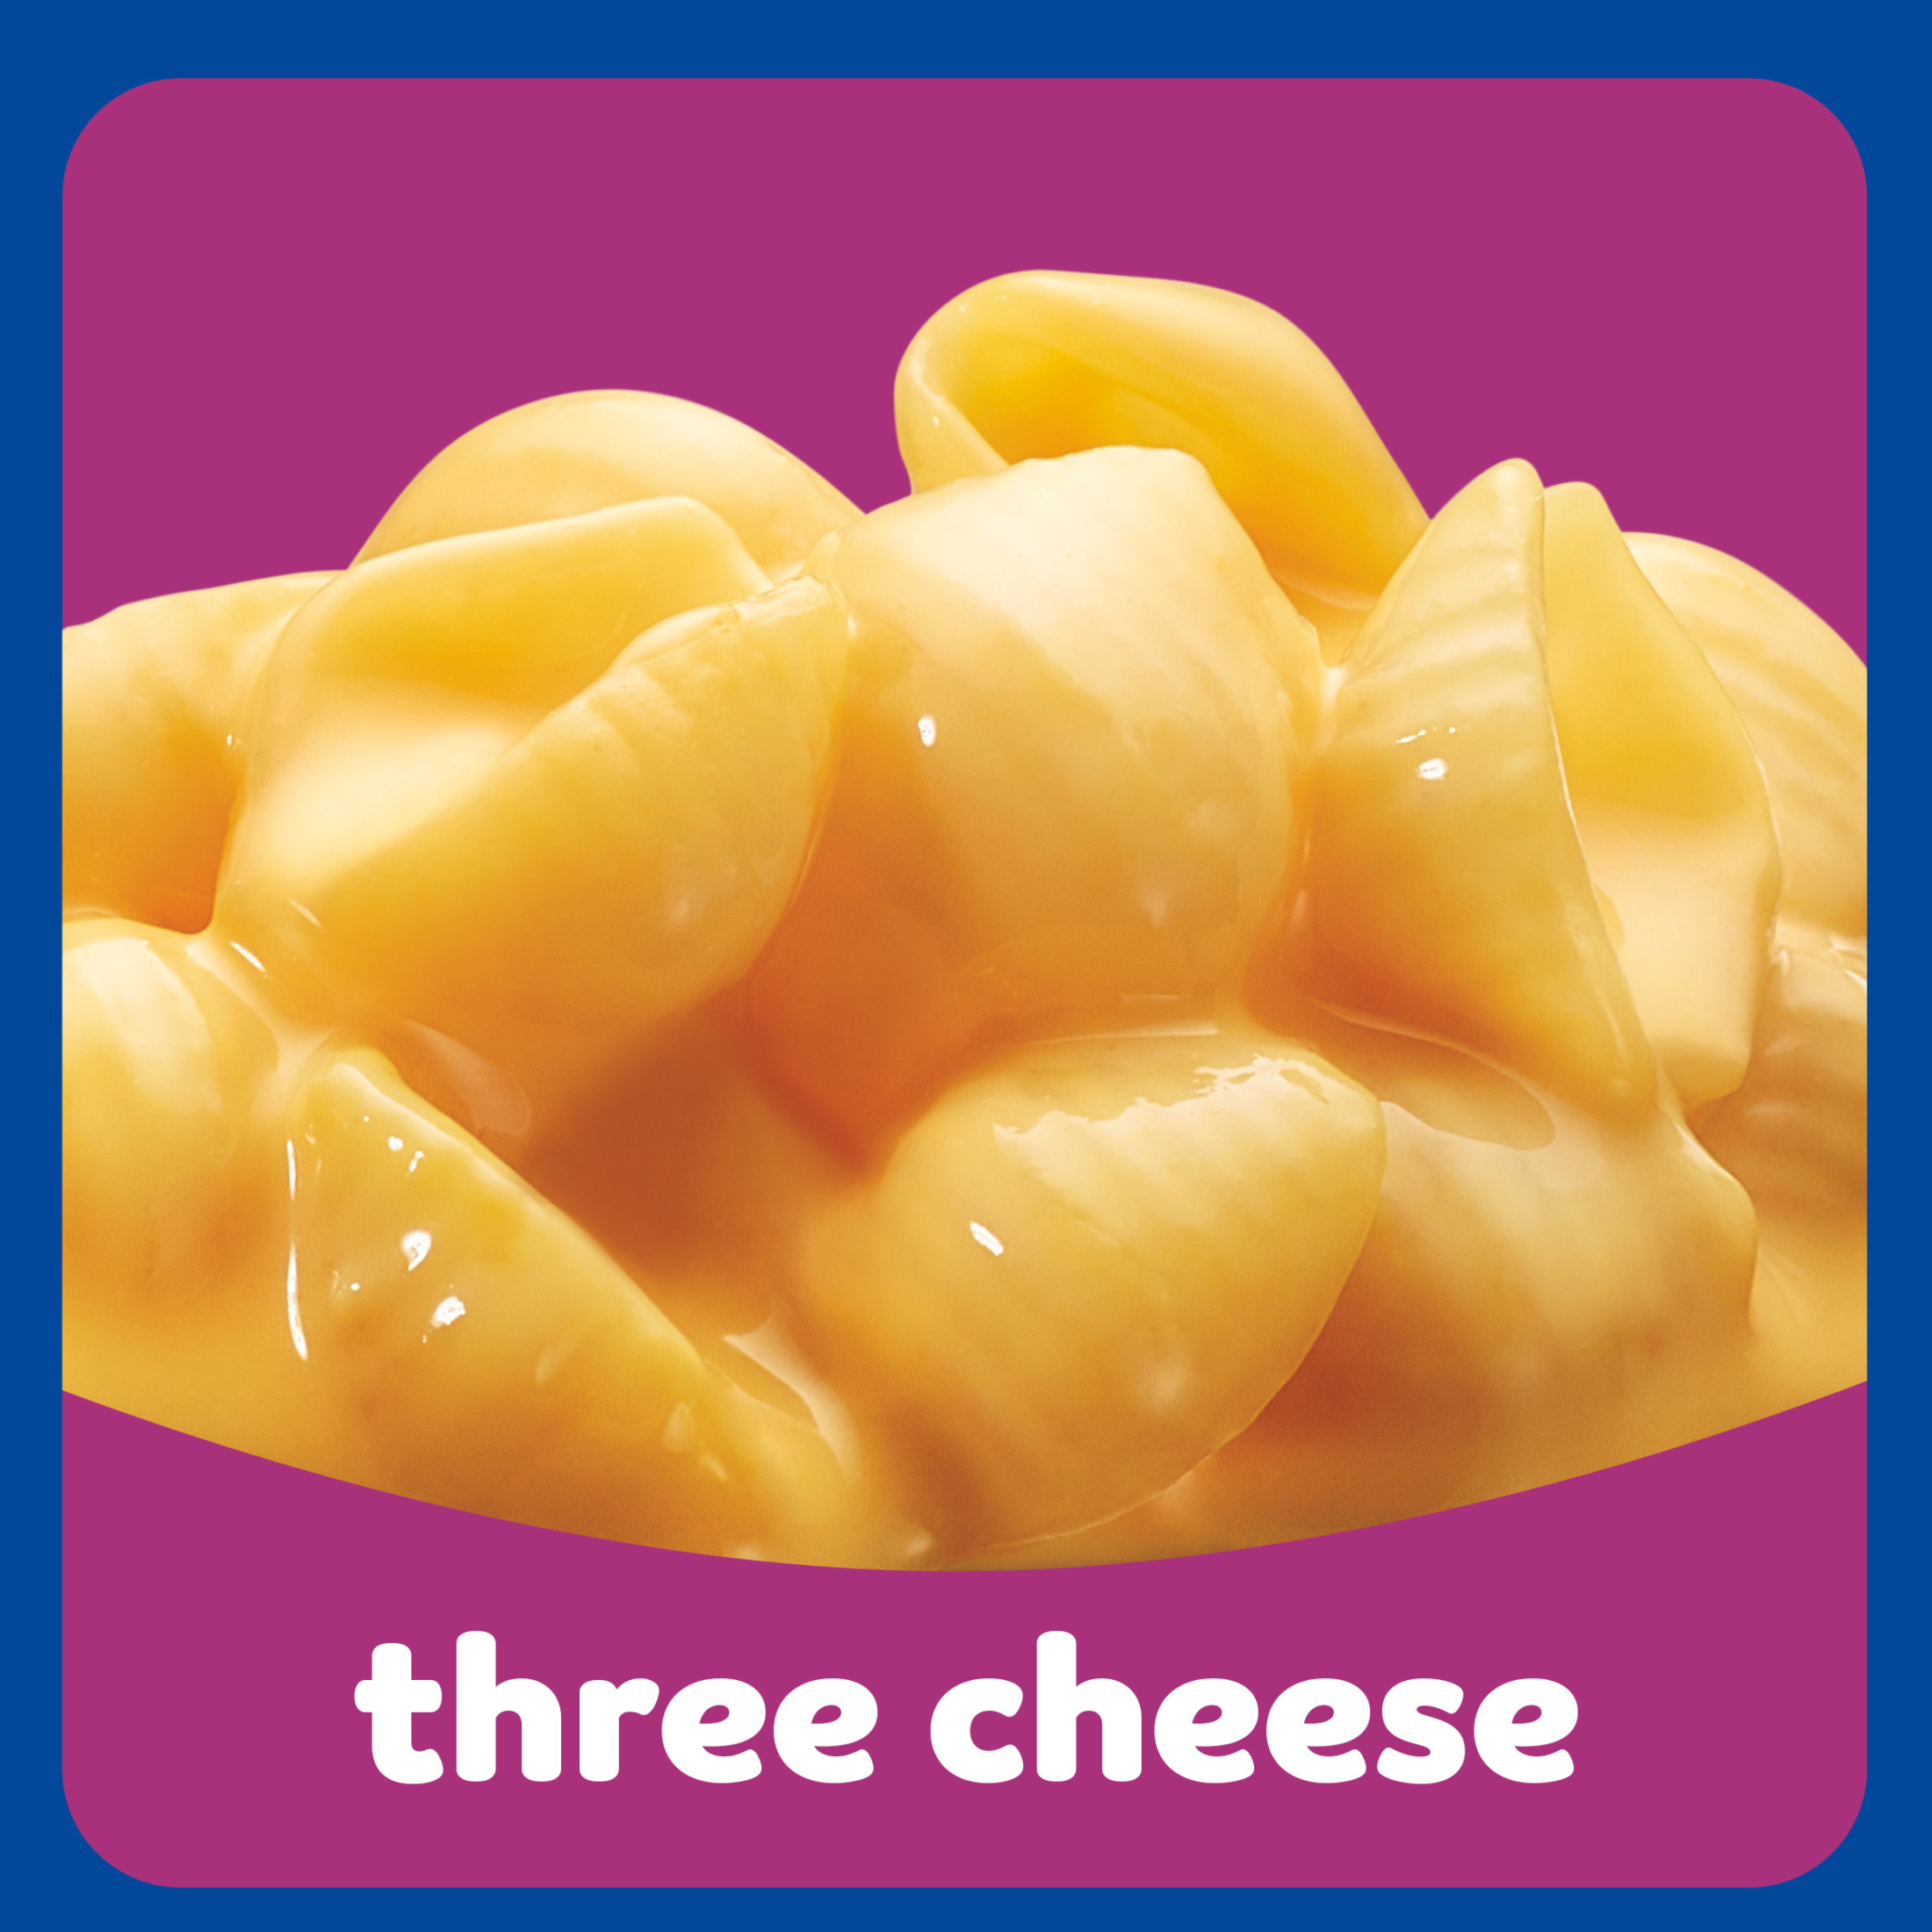 Kraft Three Cheese Mac N Cheese Macaroni and Cheese Dinner with Mini-Shell Pasta, 7.25 oz Box - image 5 of 15